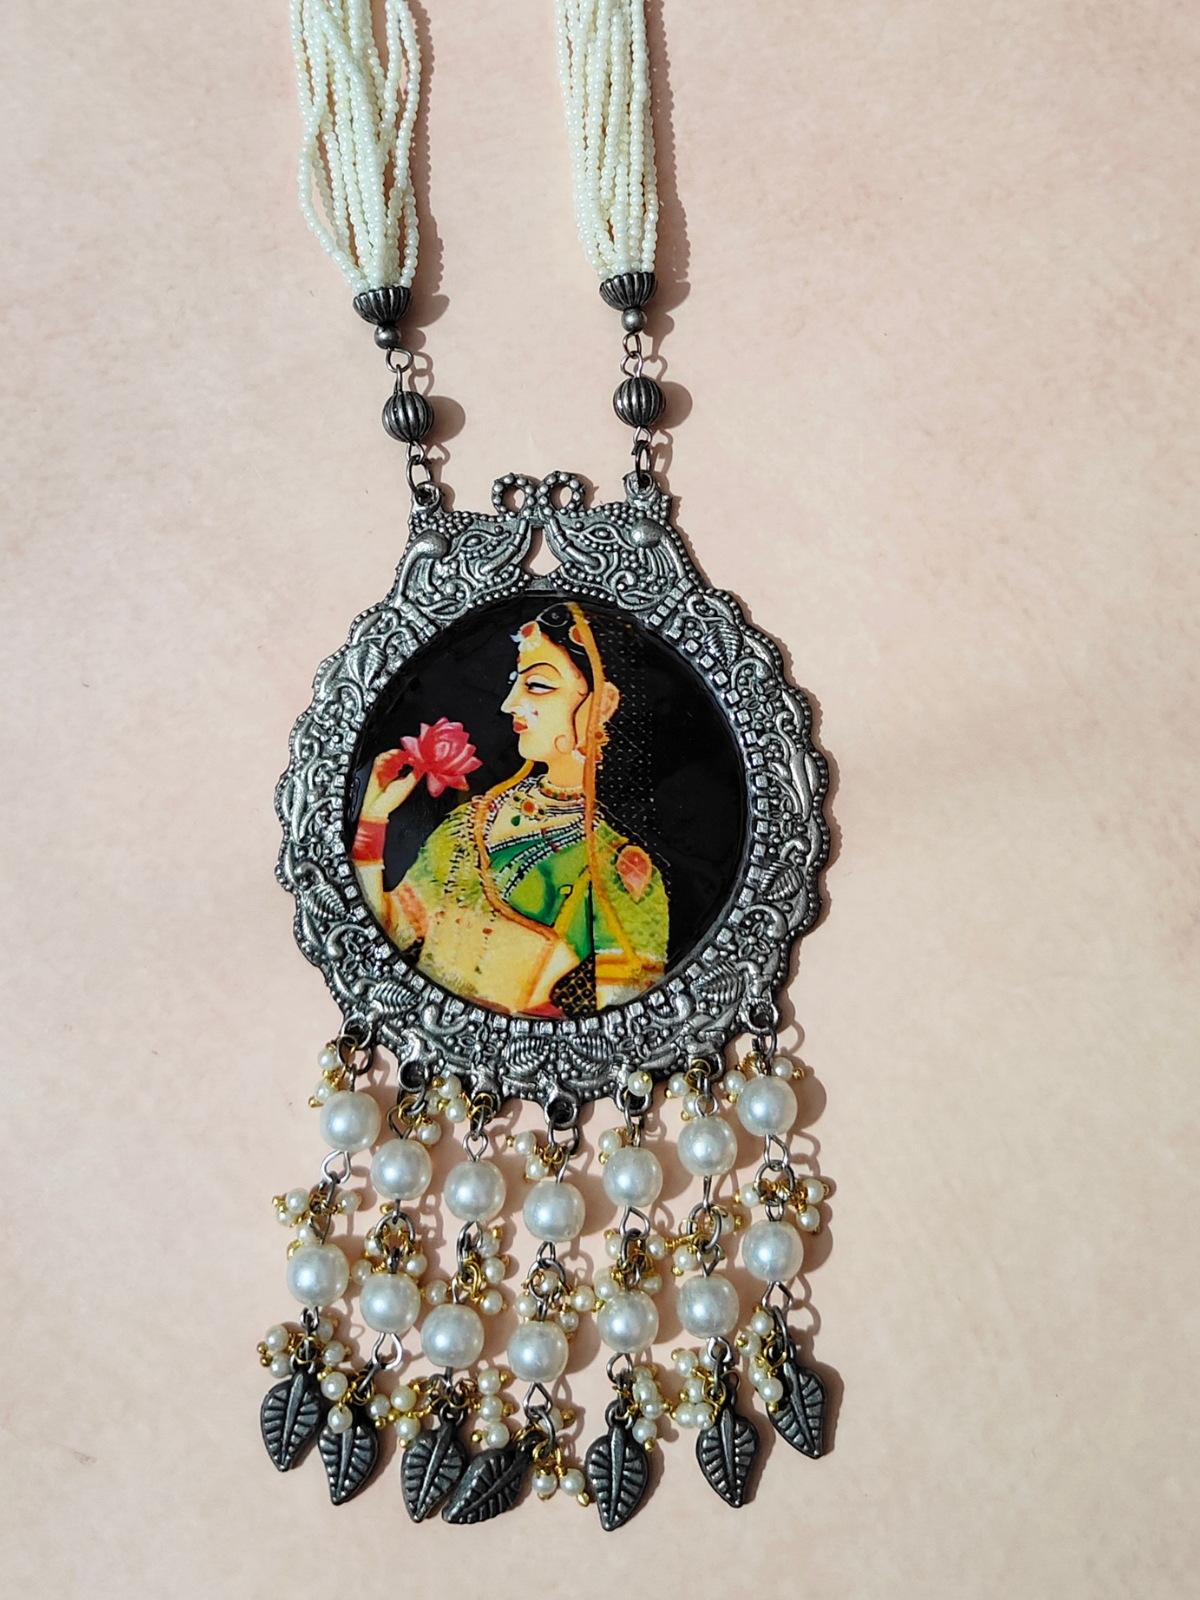 The Elegant Roshanara Necklace